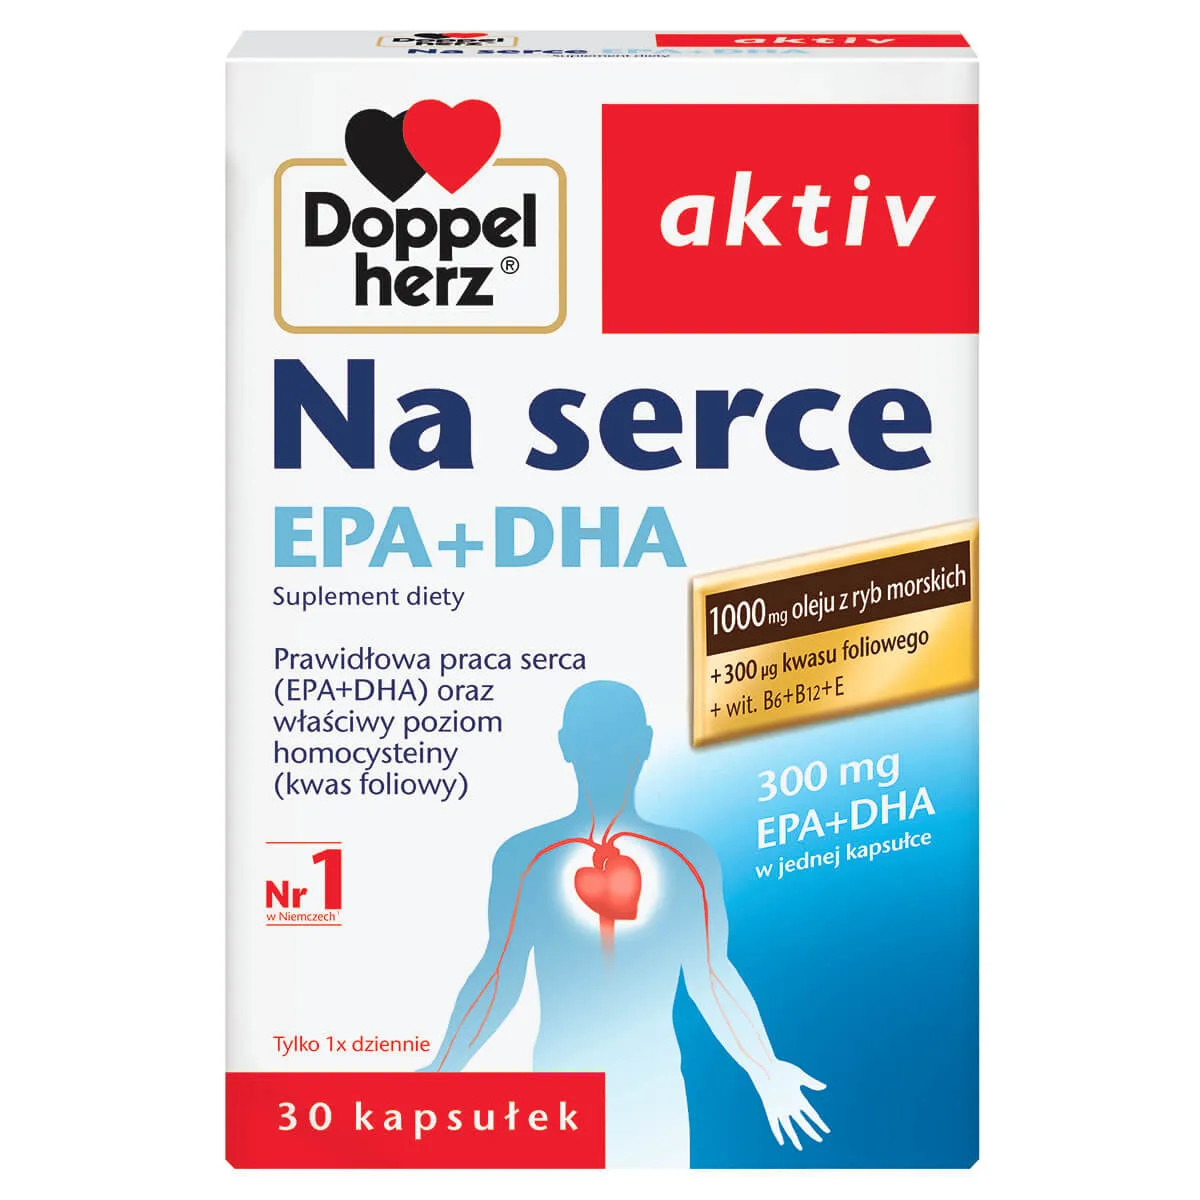 Doppelherz aktiv Na serce EPA+DHA, suplement diety, 30 kapsułek